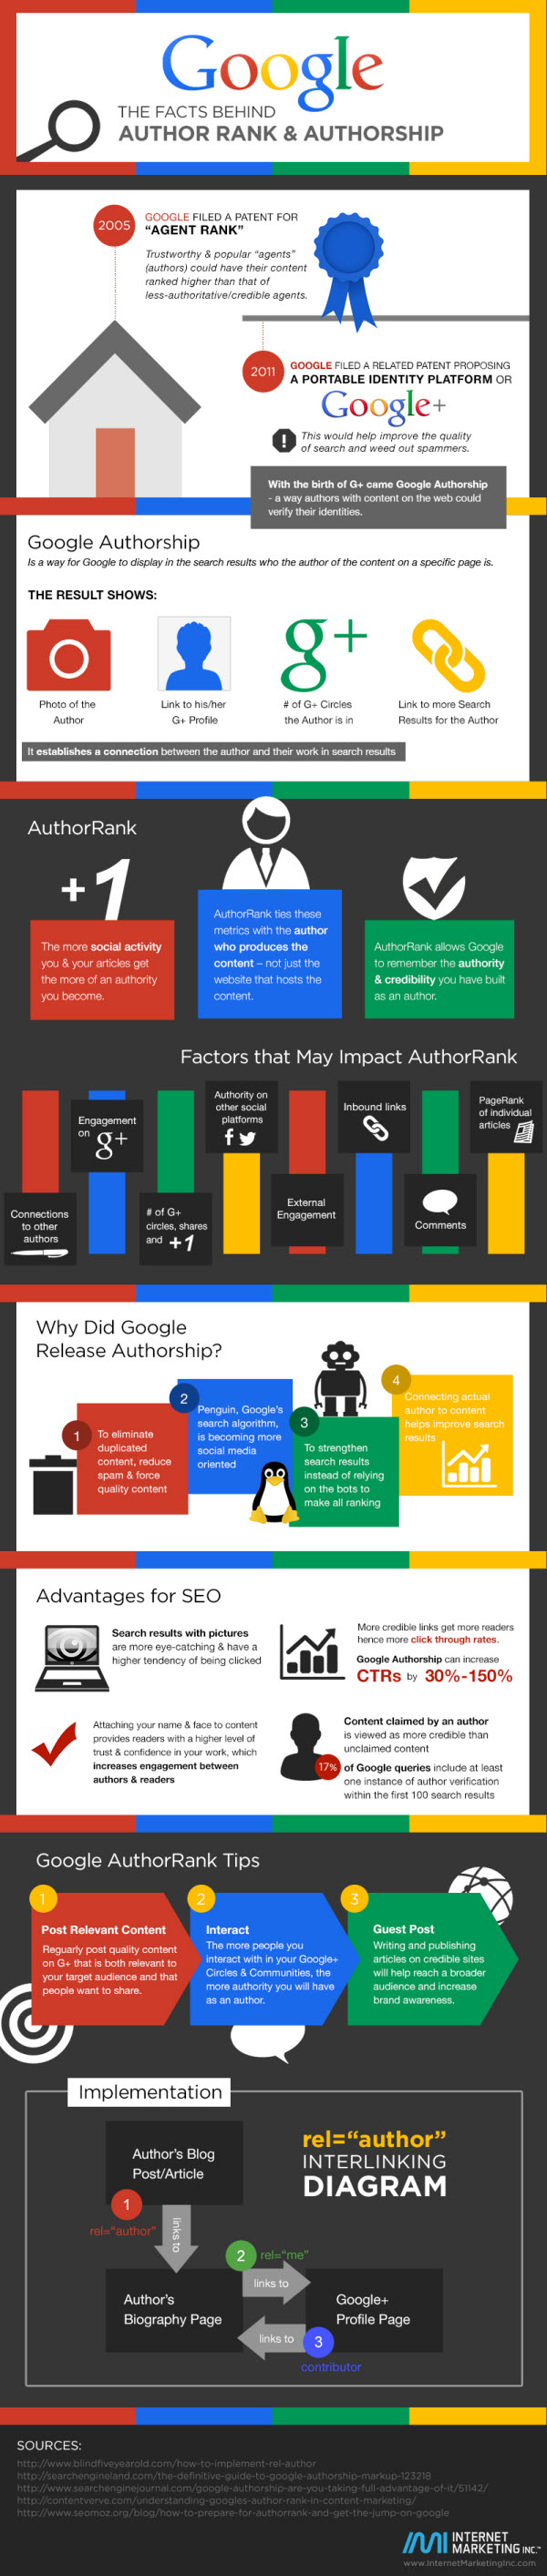 Facts Behind Google Author Rank & Authorship 